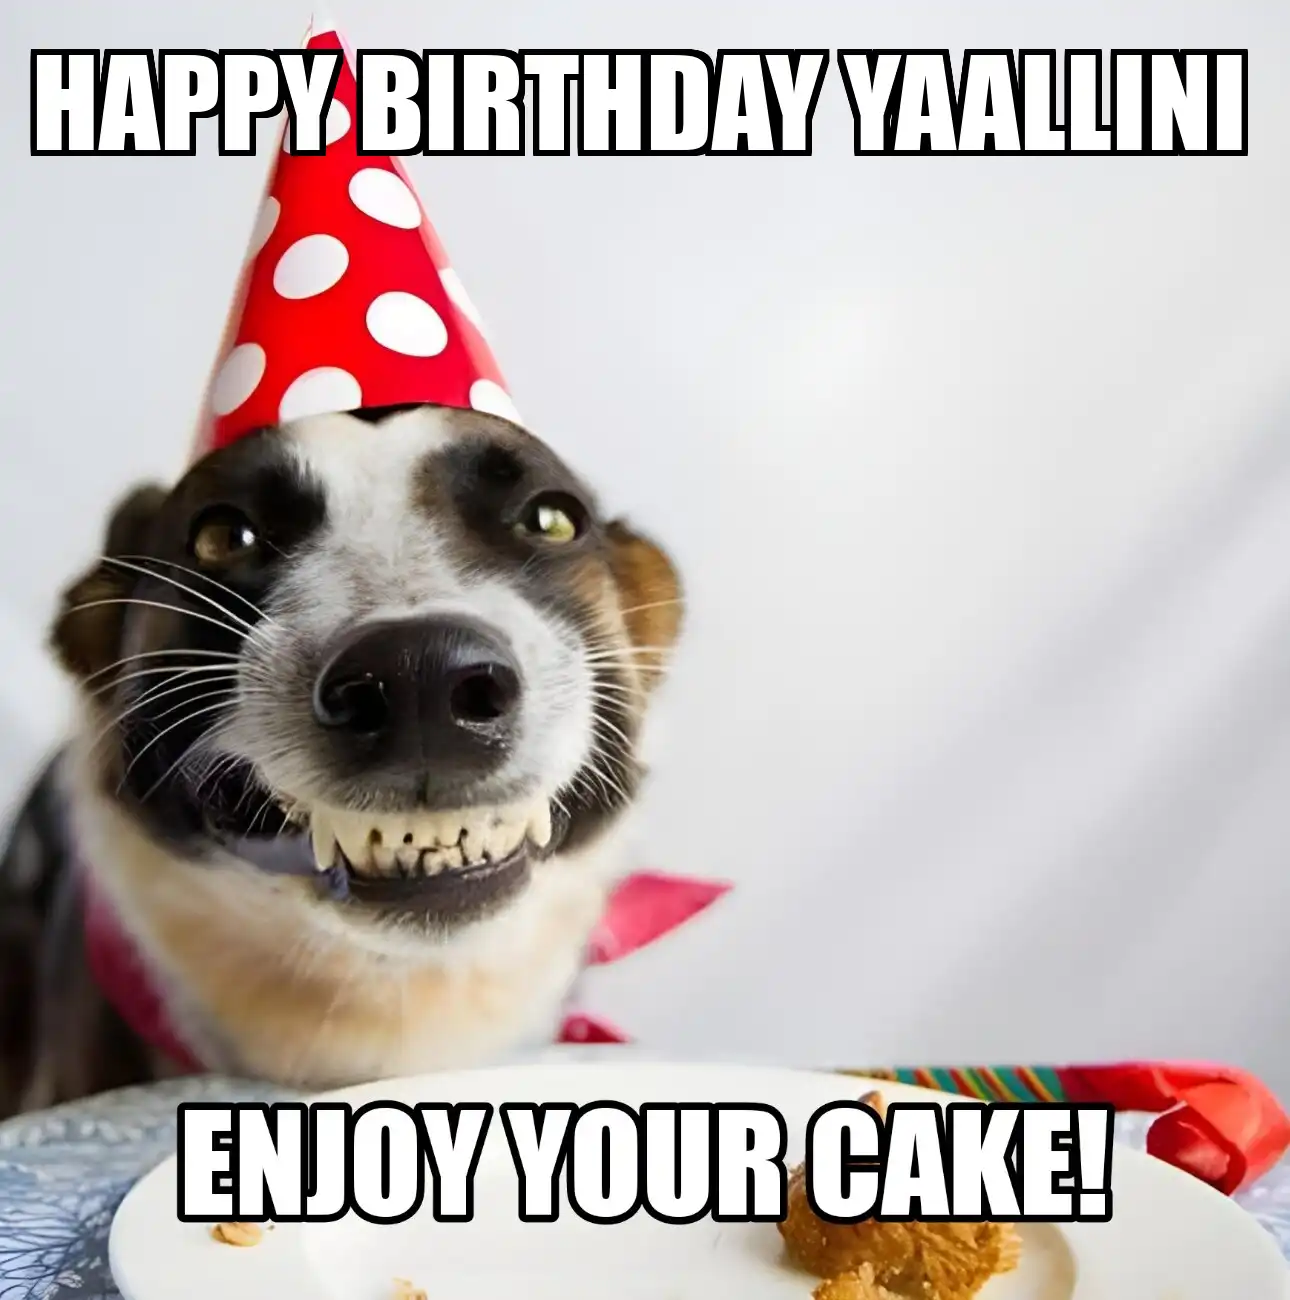 Happy Birthday Yaallini Enjoy Your Cake Dog Meme